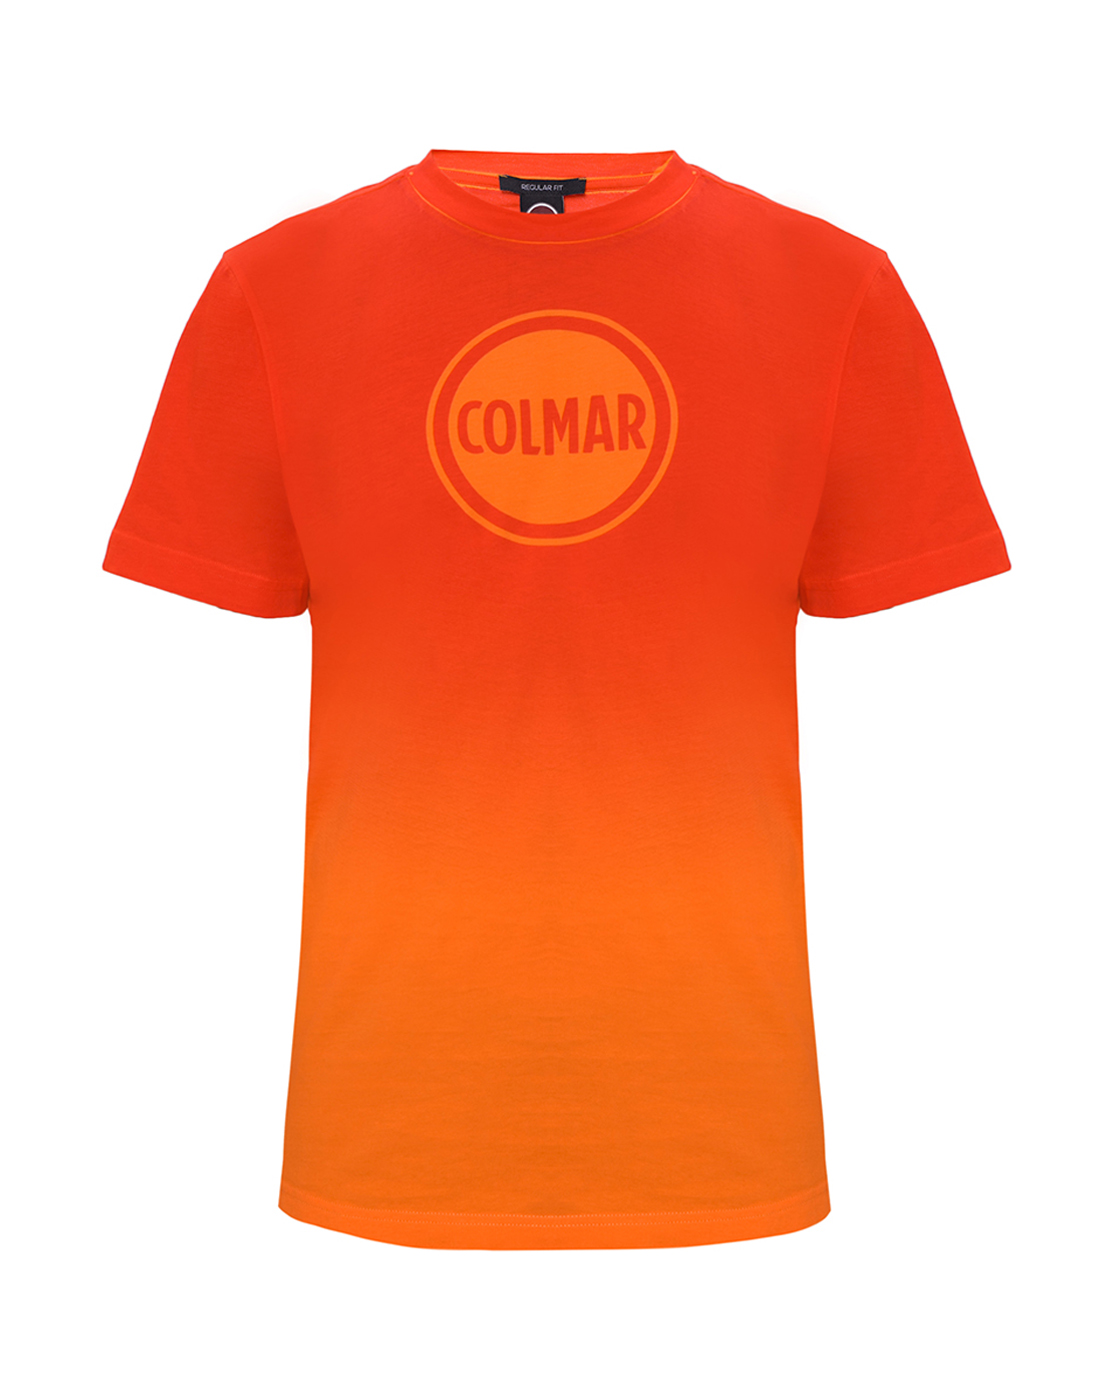 Футболка оранжевая мужская Colmar S7507 1YJ 668-1